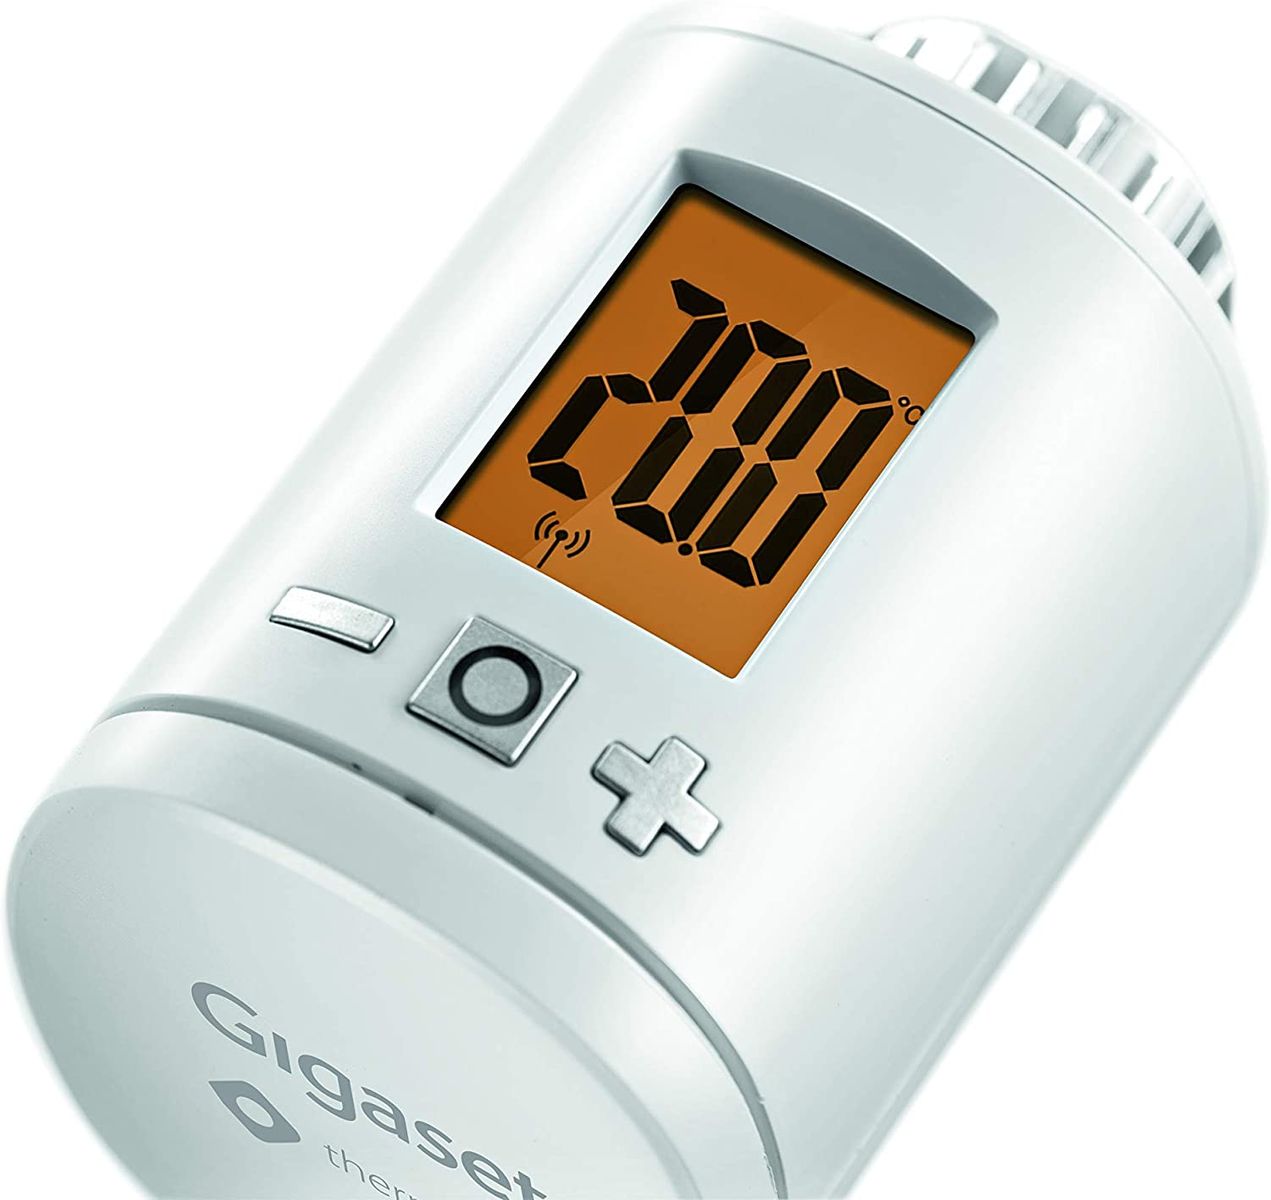 Gigaset Elements S30851-H2538-R101 radio heater thermostat, white